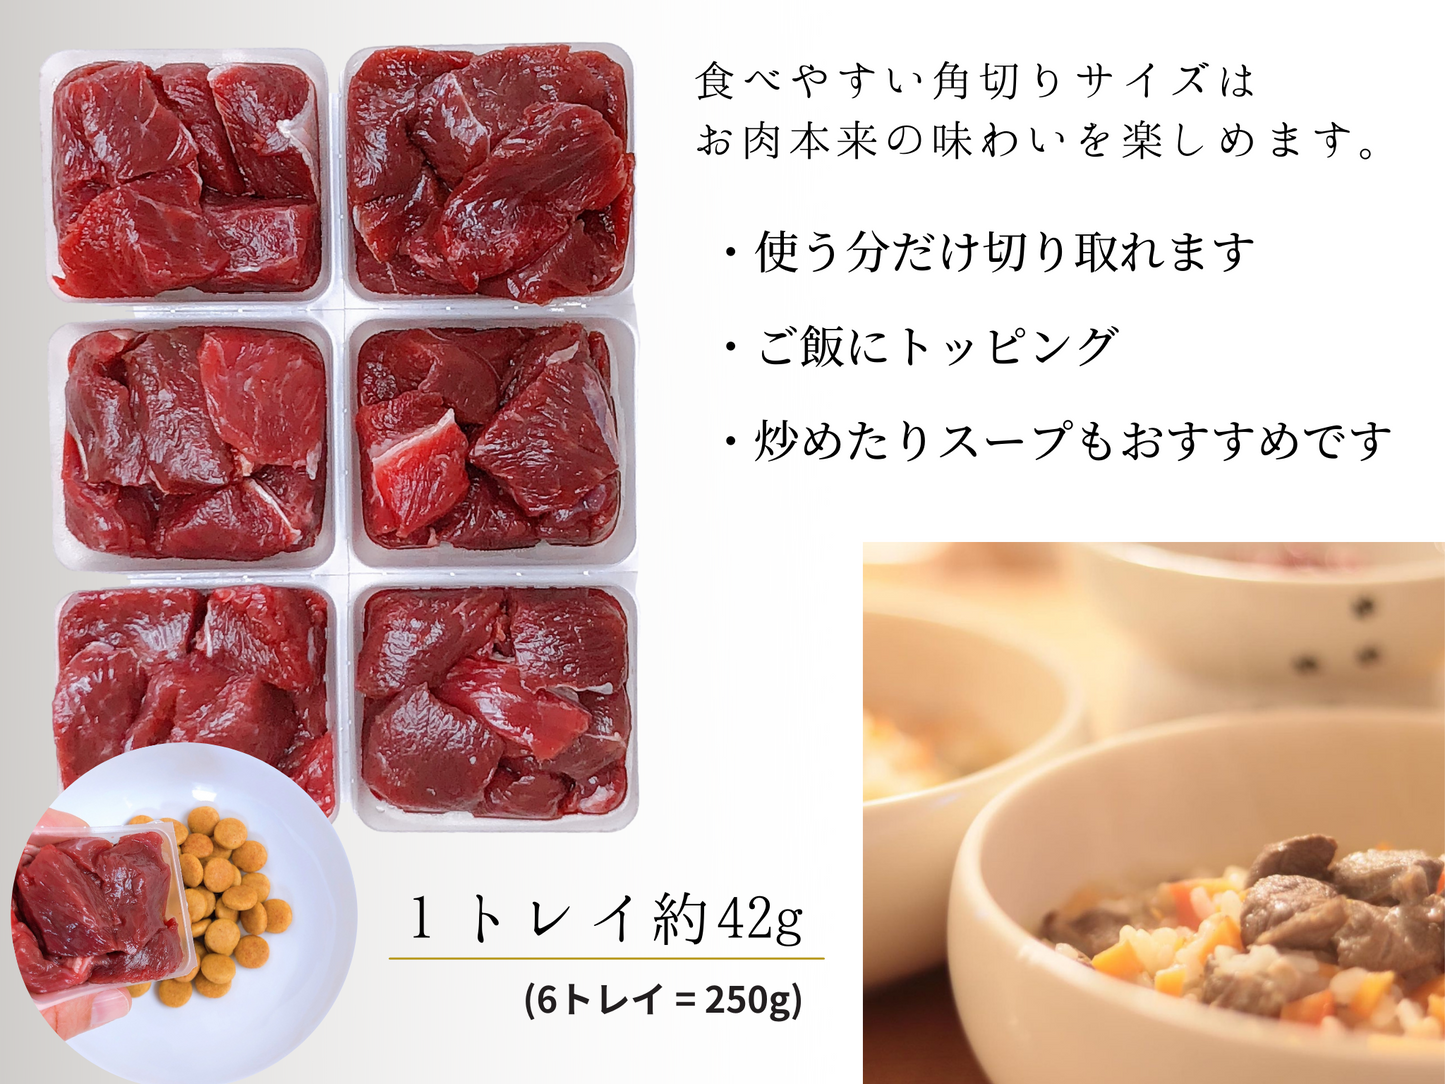 Zasshu® [Square Cut Tray] Venison Ezo Deer Meat Ezo Venison Ezoshika Meat [Hokkaido Highest Quality] Dog Cat Pet Food Block Chopped